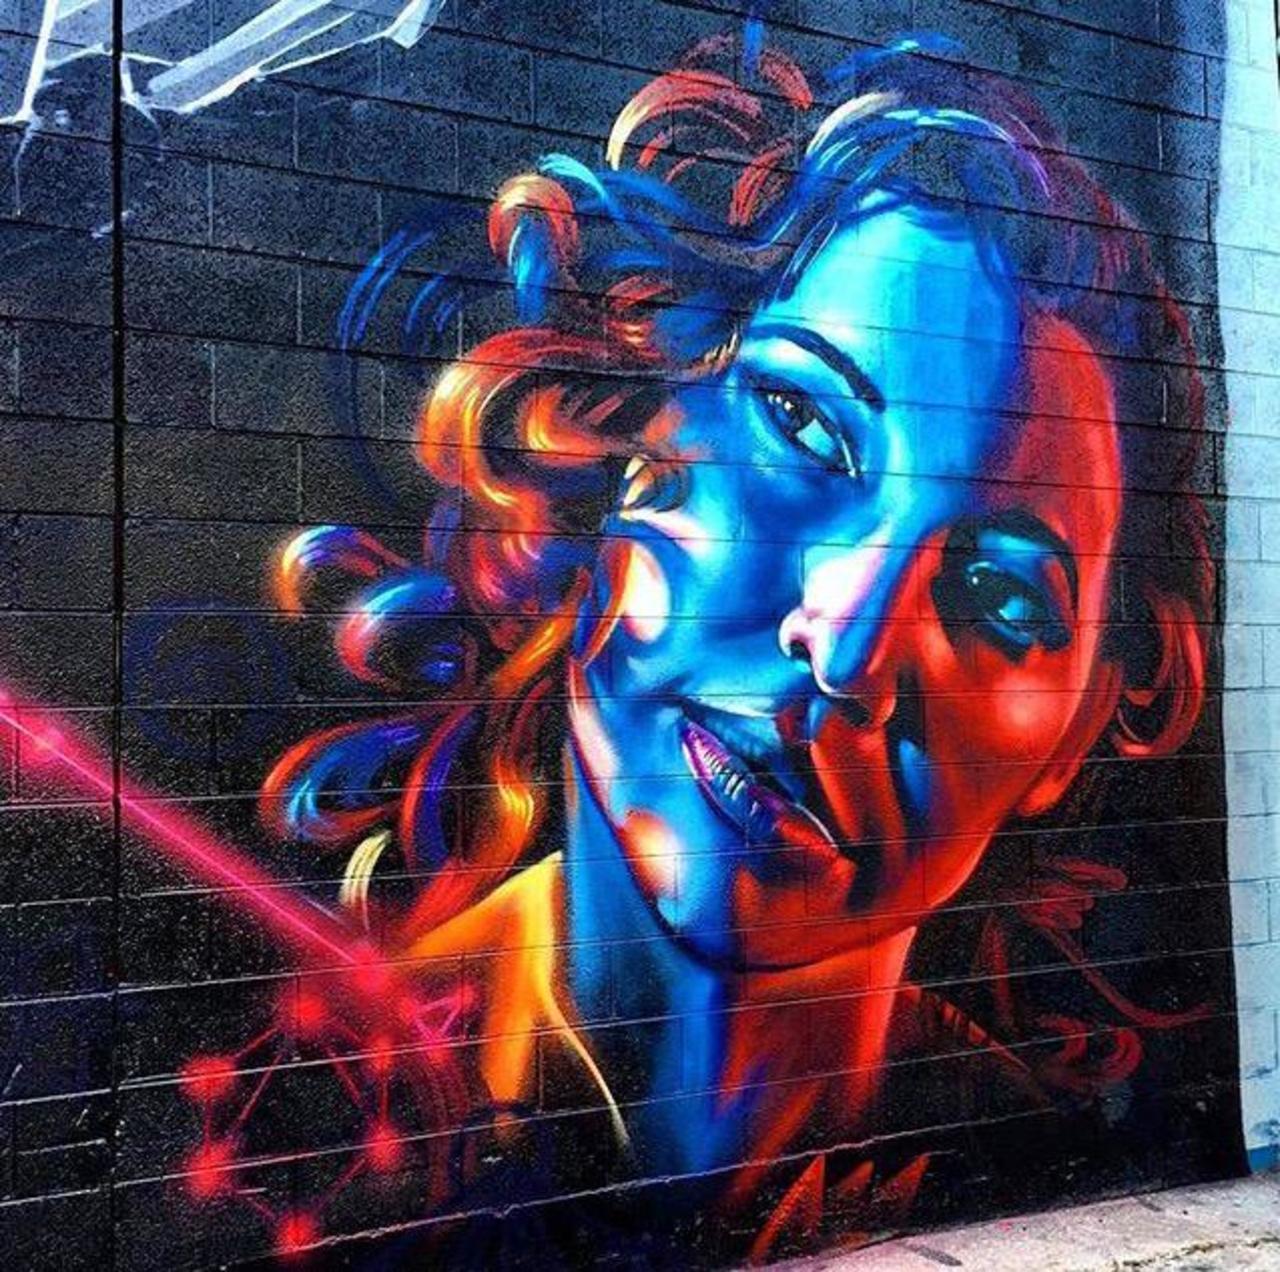 RT @GoogleStreetArt: Street Art by dreadicrgod 

#art #graffiti #mural #streetart http://t.co/cv1lOPSvSH